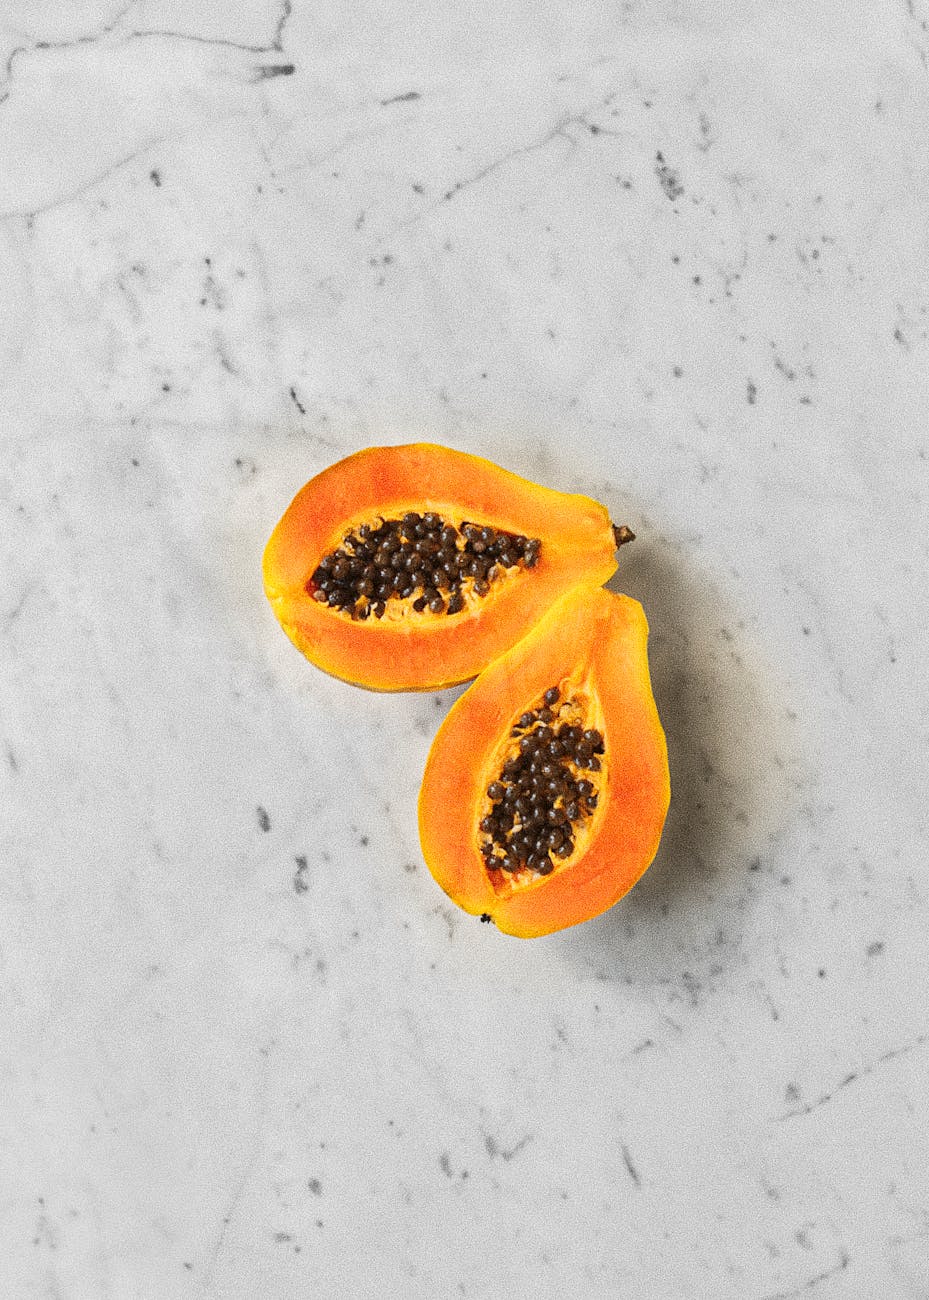 papaya sliced in half kept on a grey background